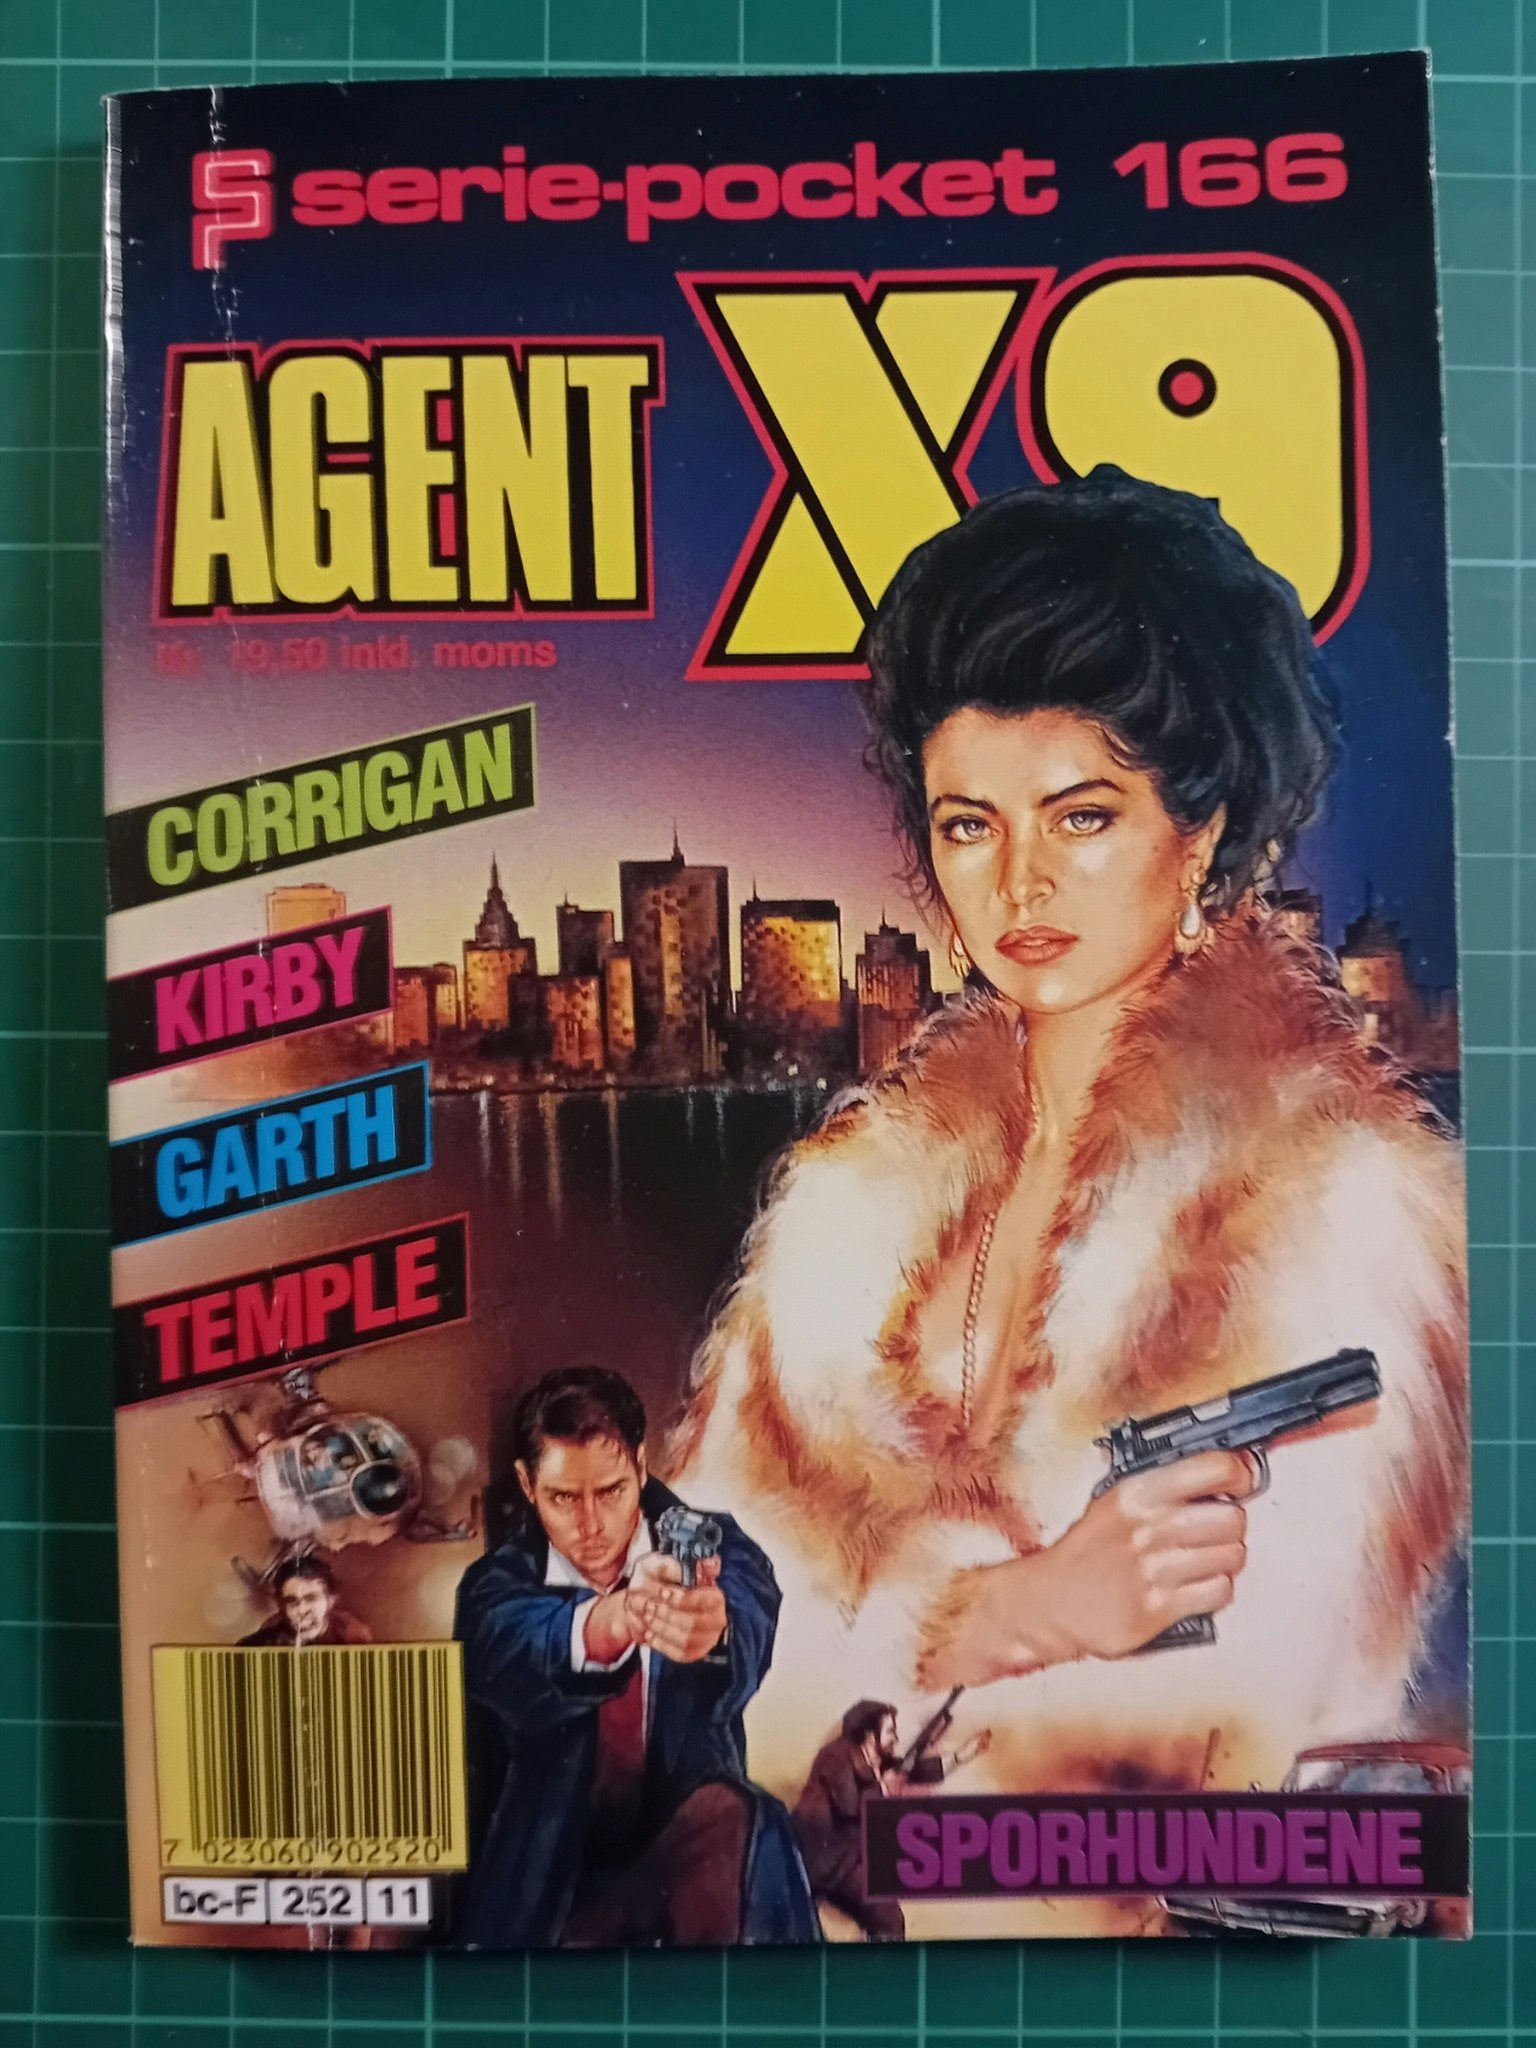 Serie-pocket 166 : Agent X9